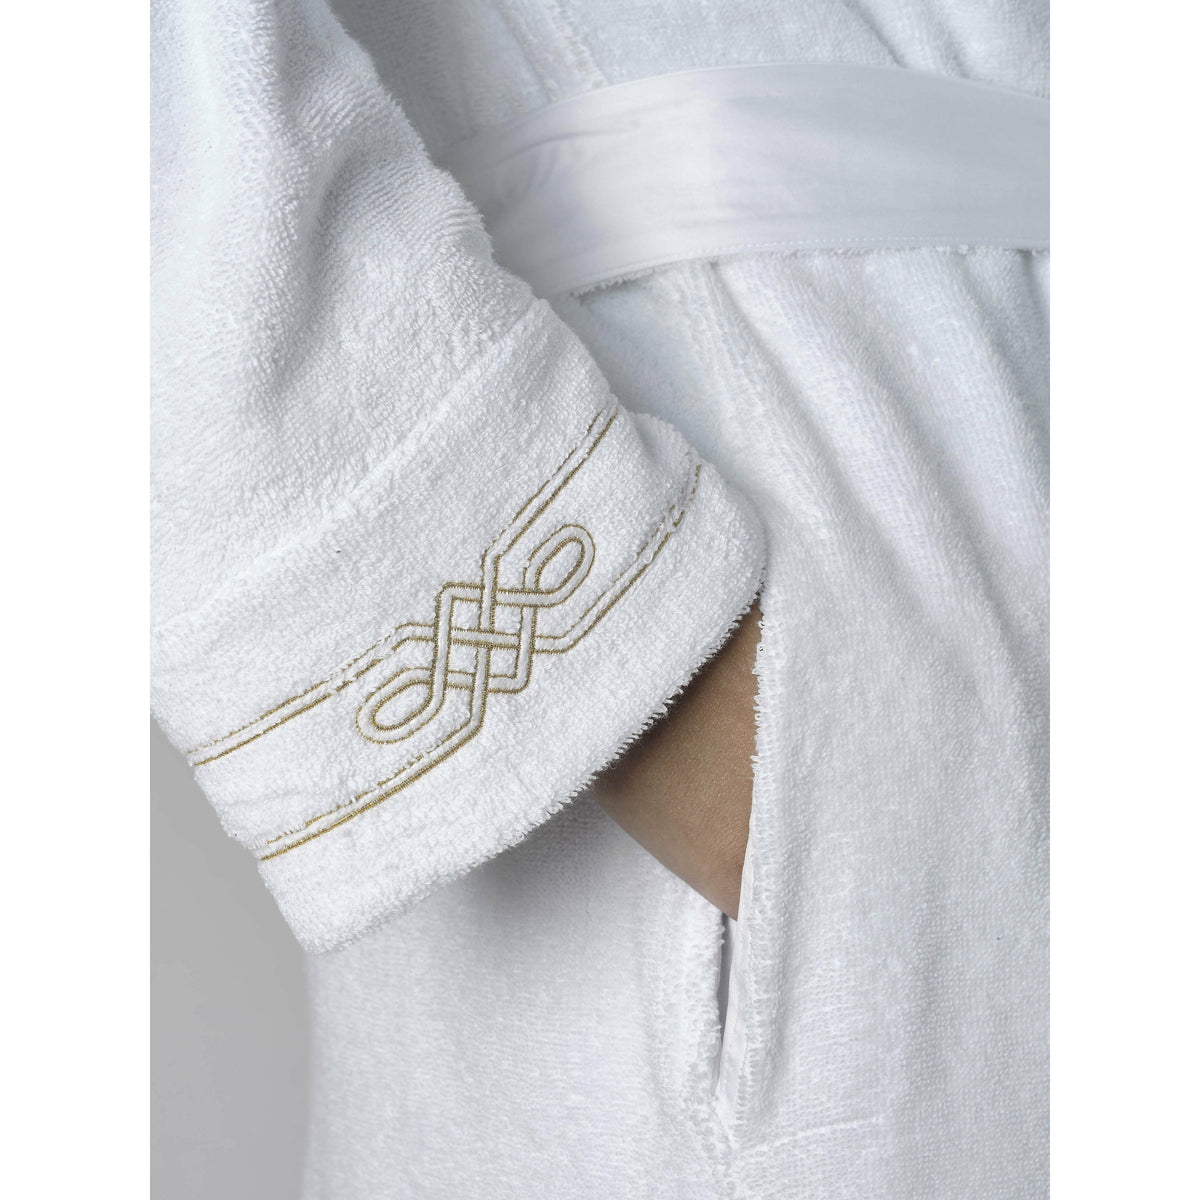 Abyss Spencer Bath Robe Detail White/Gold (108) Fine Linens